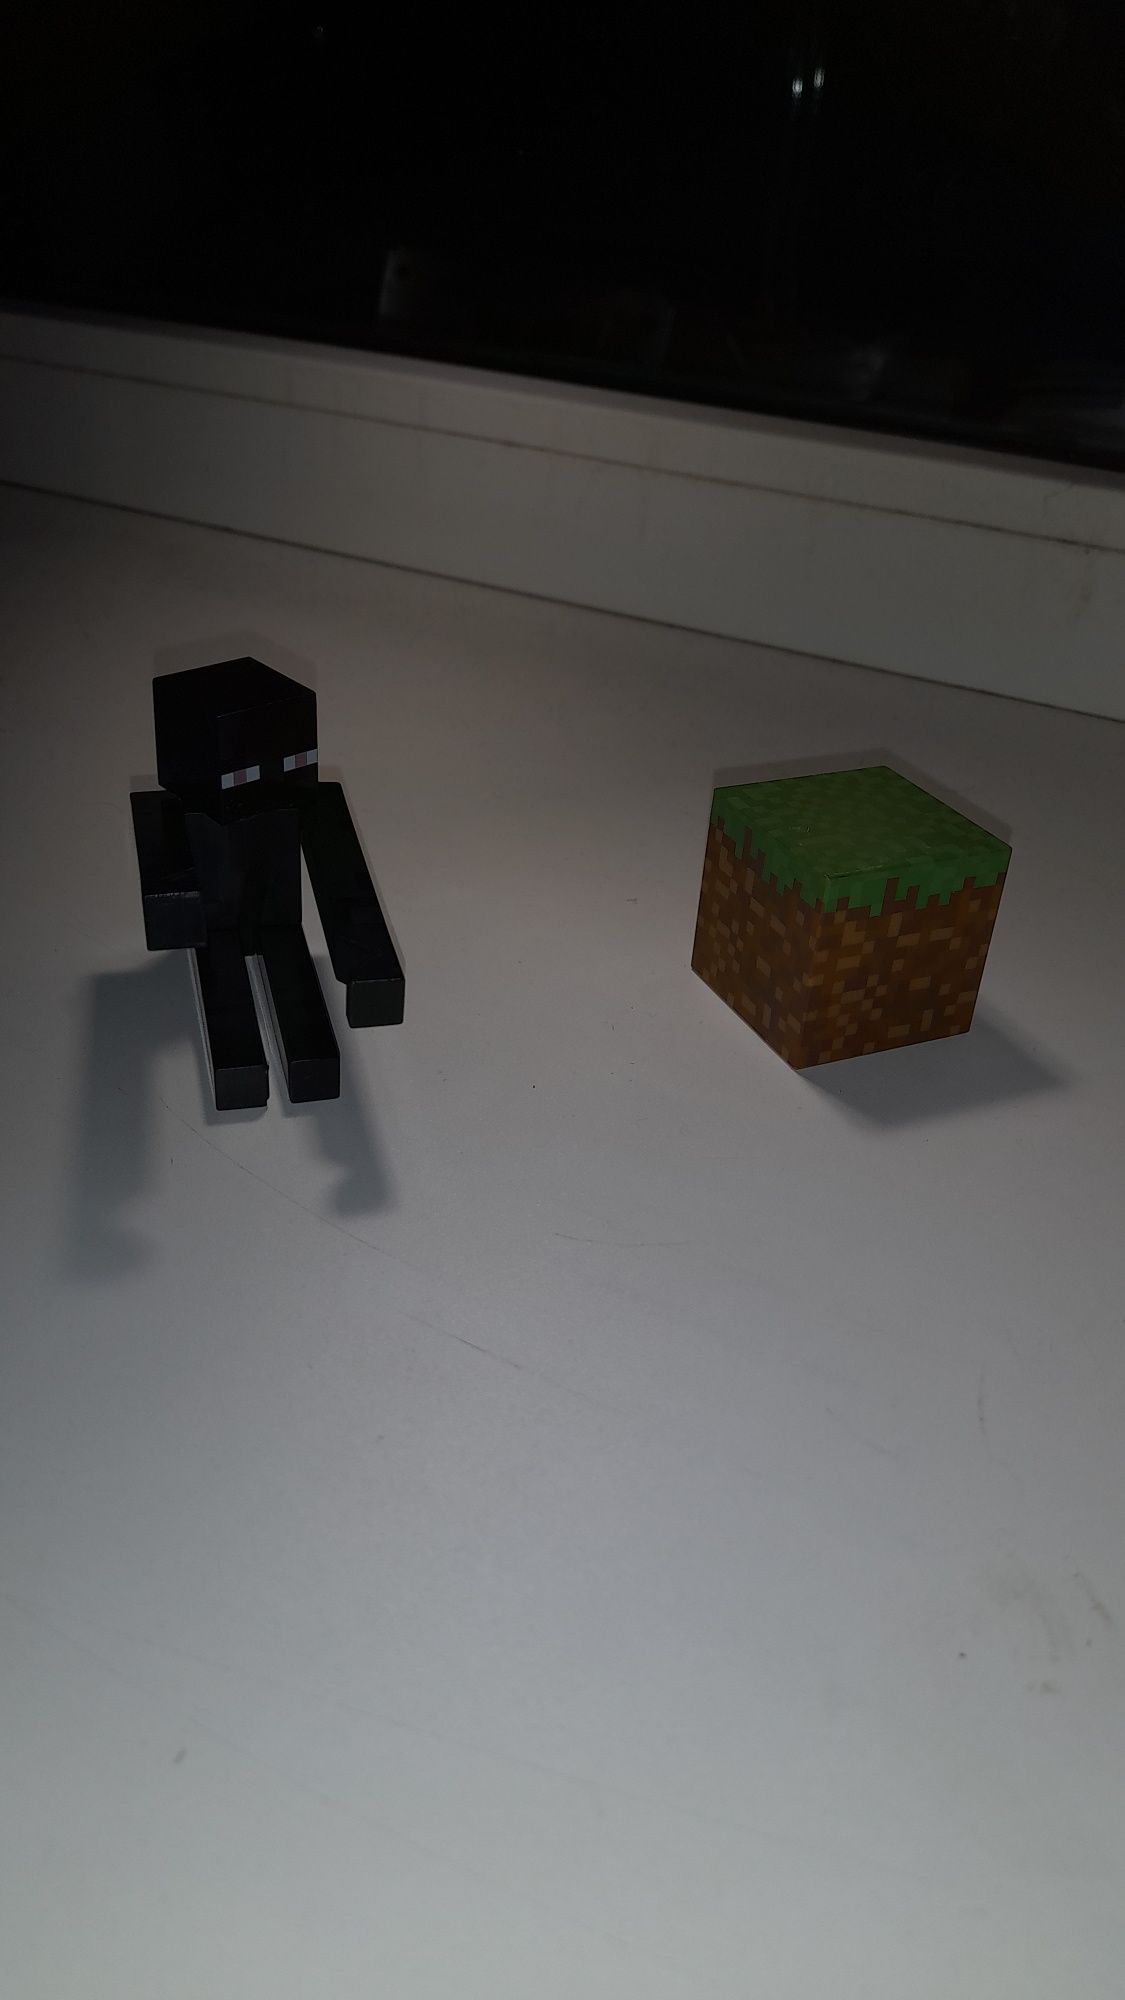 Фигурка Эндермена с блоком дёрна Minecraft Core Enderman Figure Pac